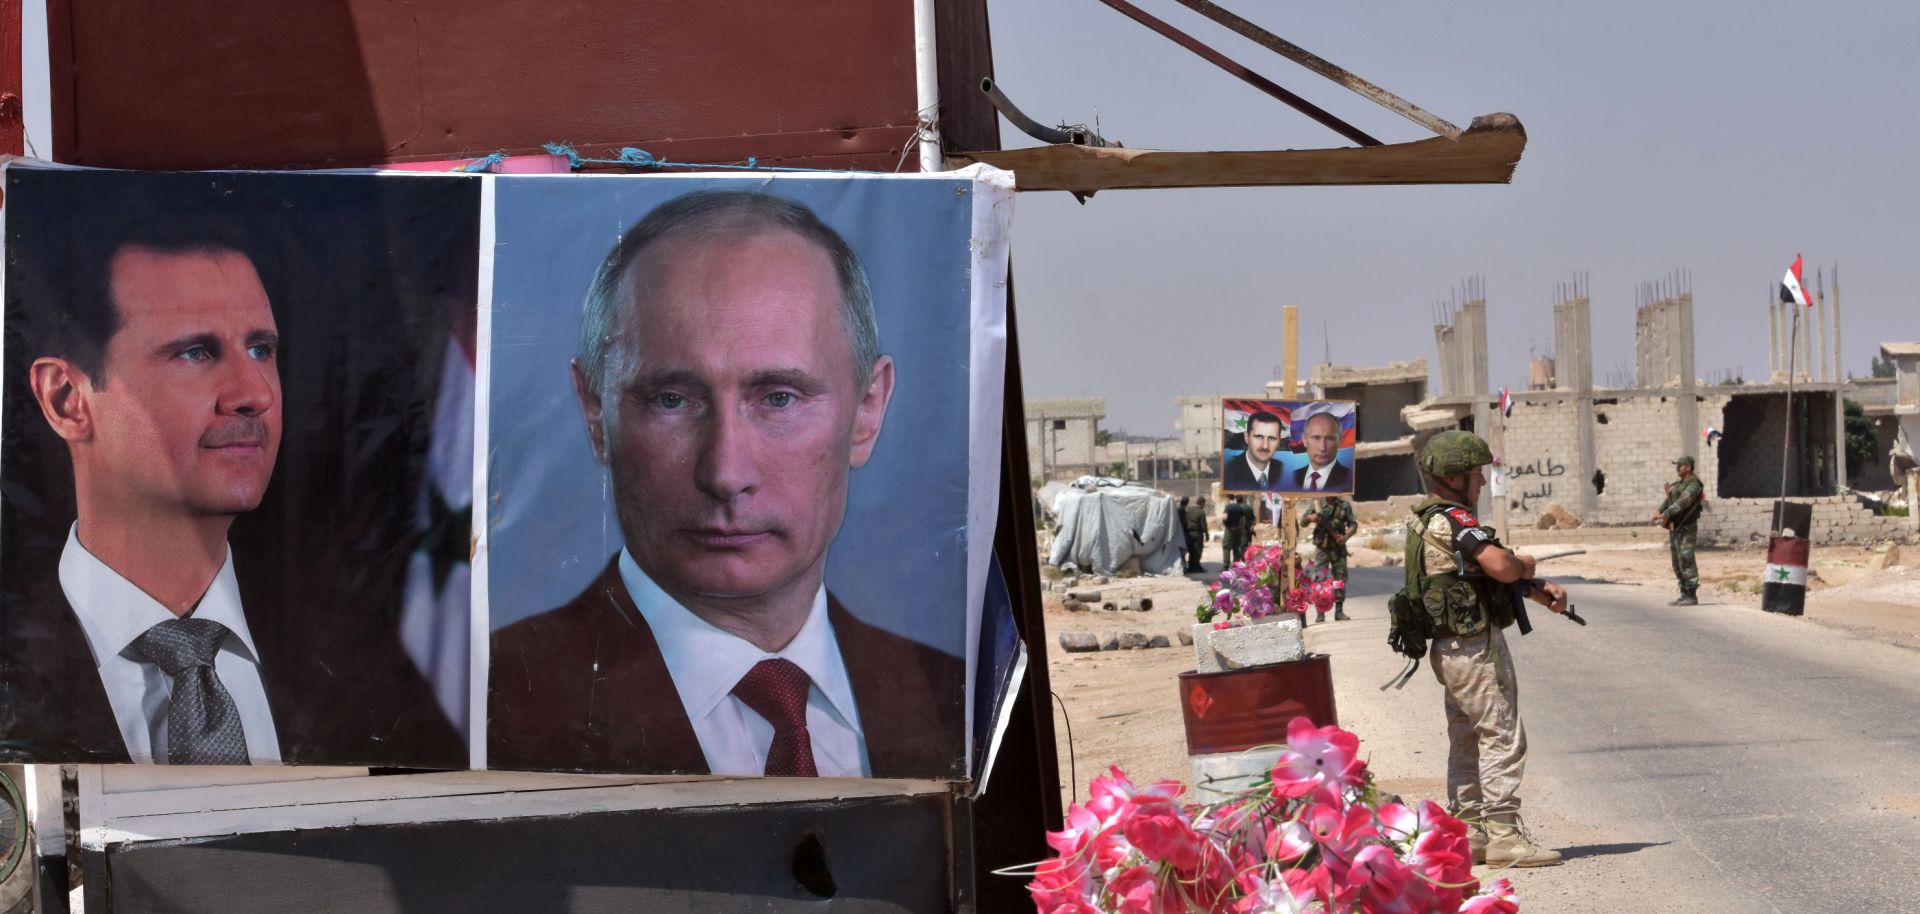 Posters of Syrian President Bashar al Assad and of Russian President Vladimir Putin adorn a kiosk at a border crossing in eastern Idlib province.